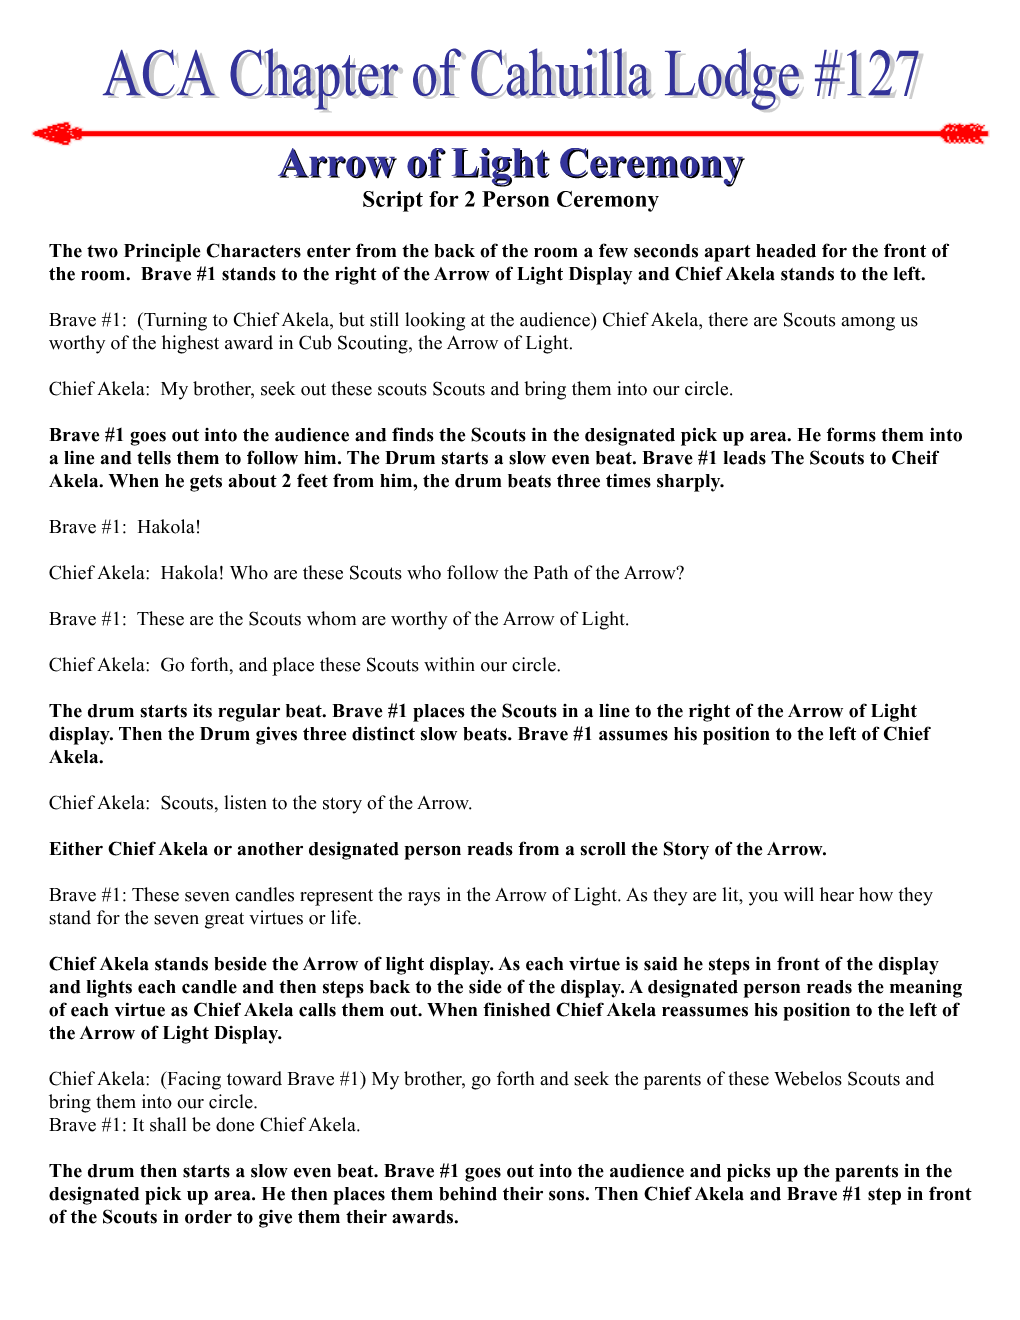 Arrow of Light Ceremony